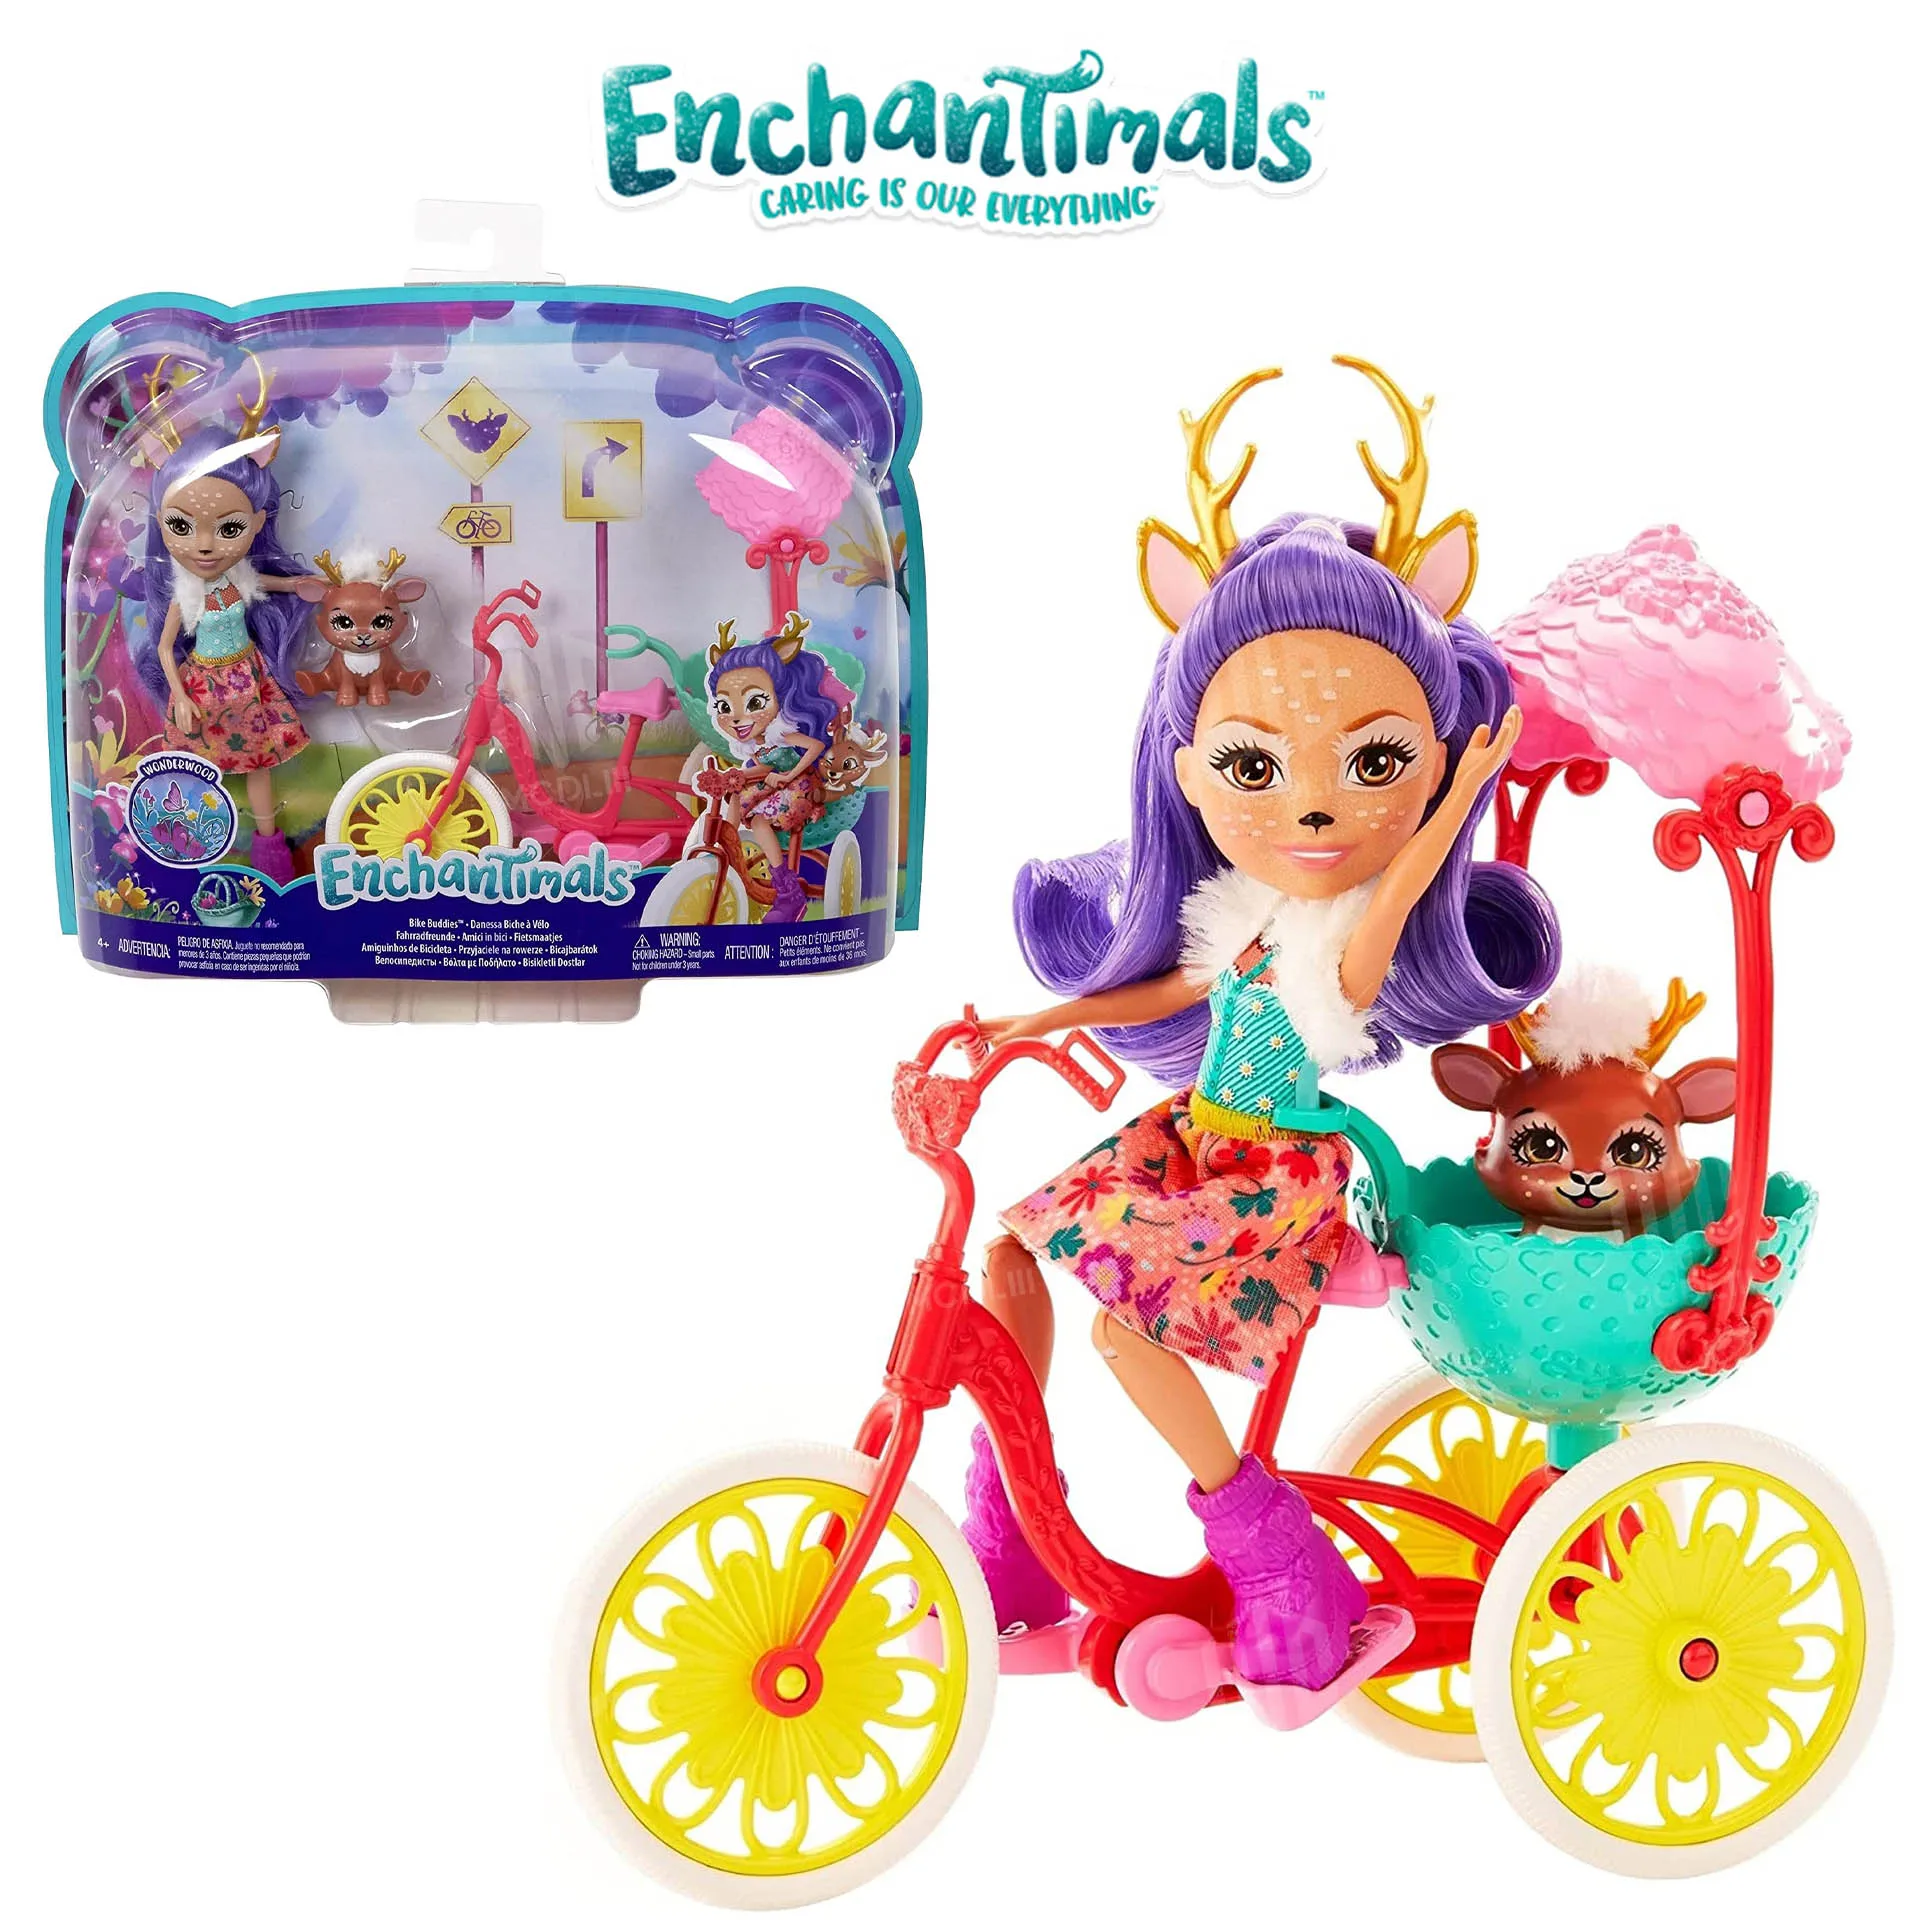 Original Enchantimals Dolls Playset Enchantimals Popular Character Babies  Animal Figures Original Licensed Toy Gift For Girls _ - AliExpress Mobile